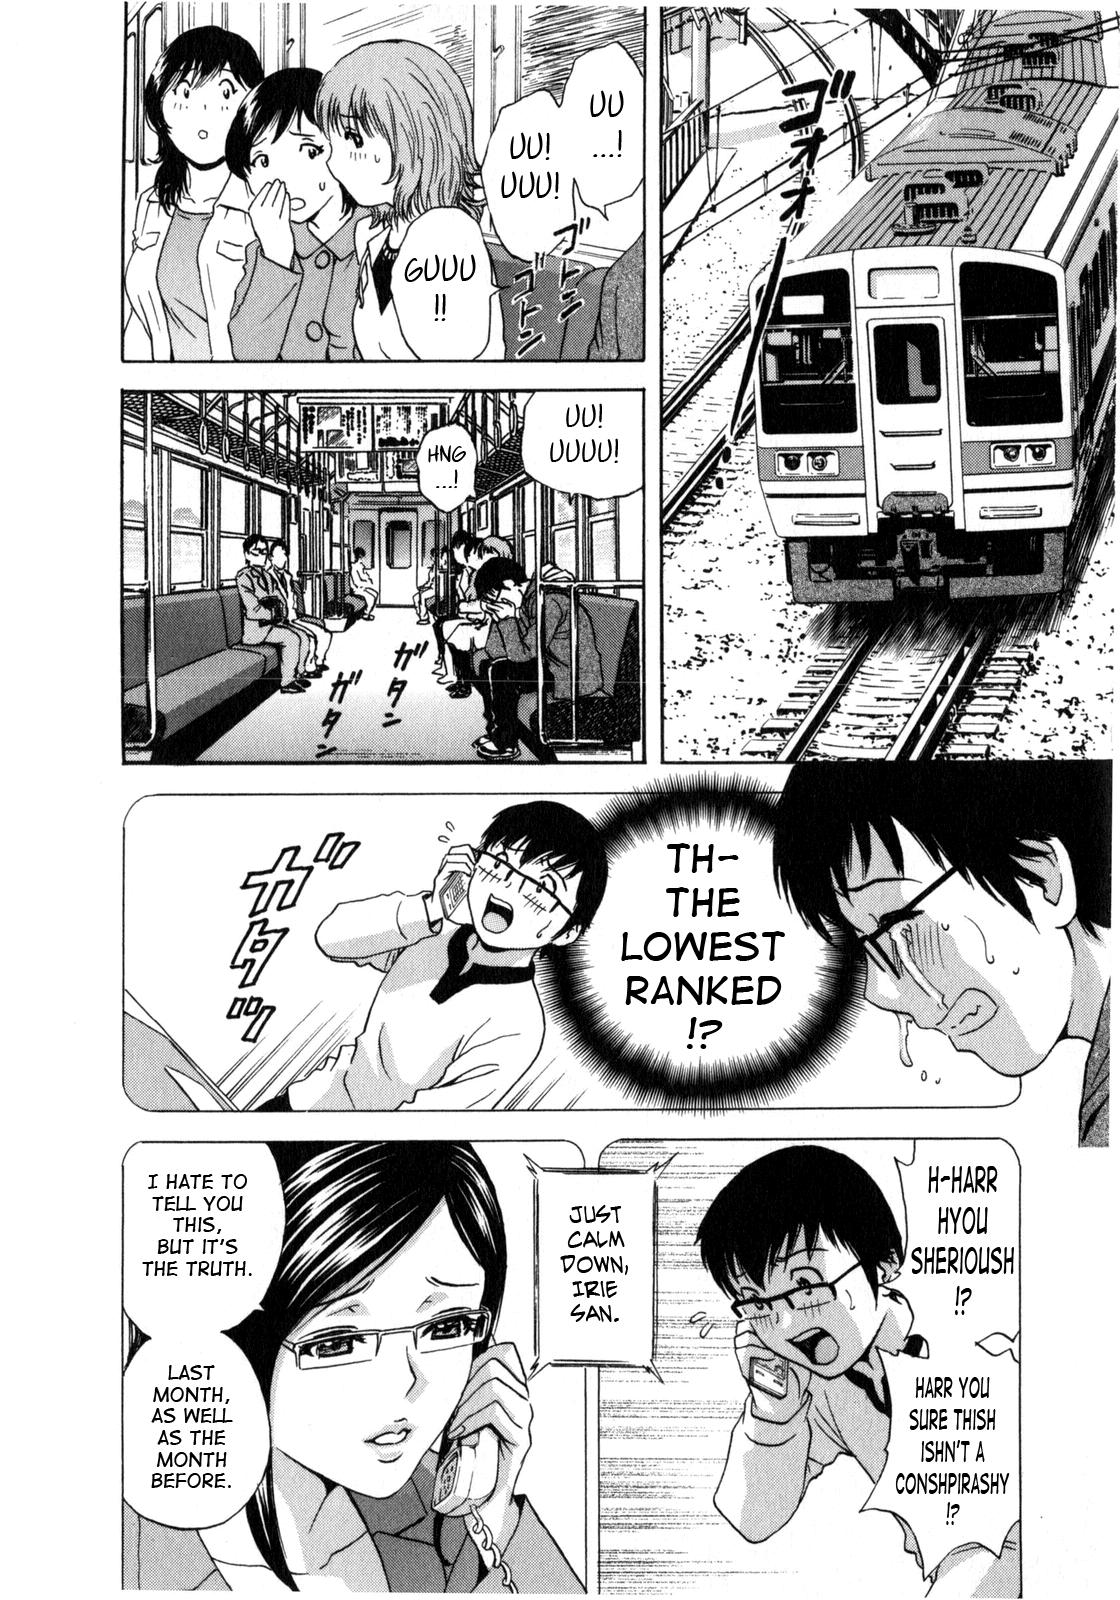 [Hidemaru] Life with Married Women Just Like a Manga 2 - Ch. 1-5 [English] {Tadanohito} 70